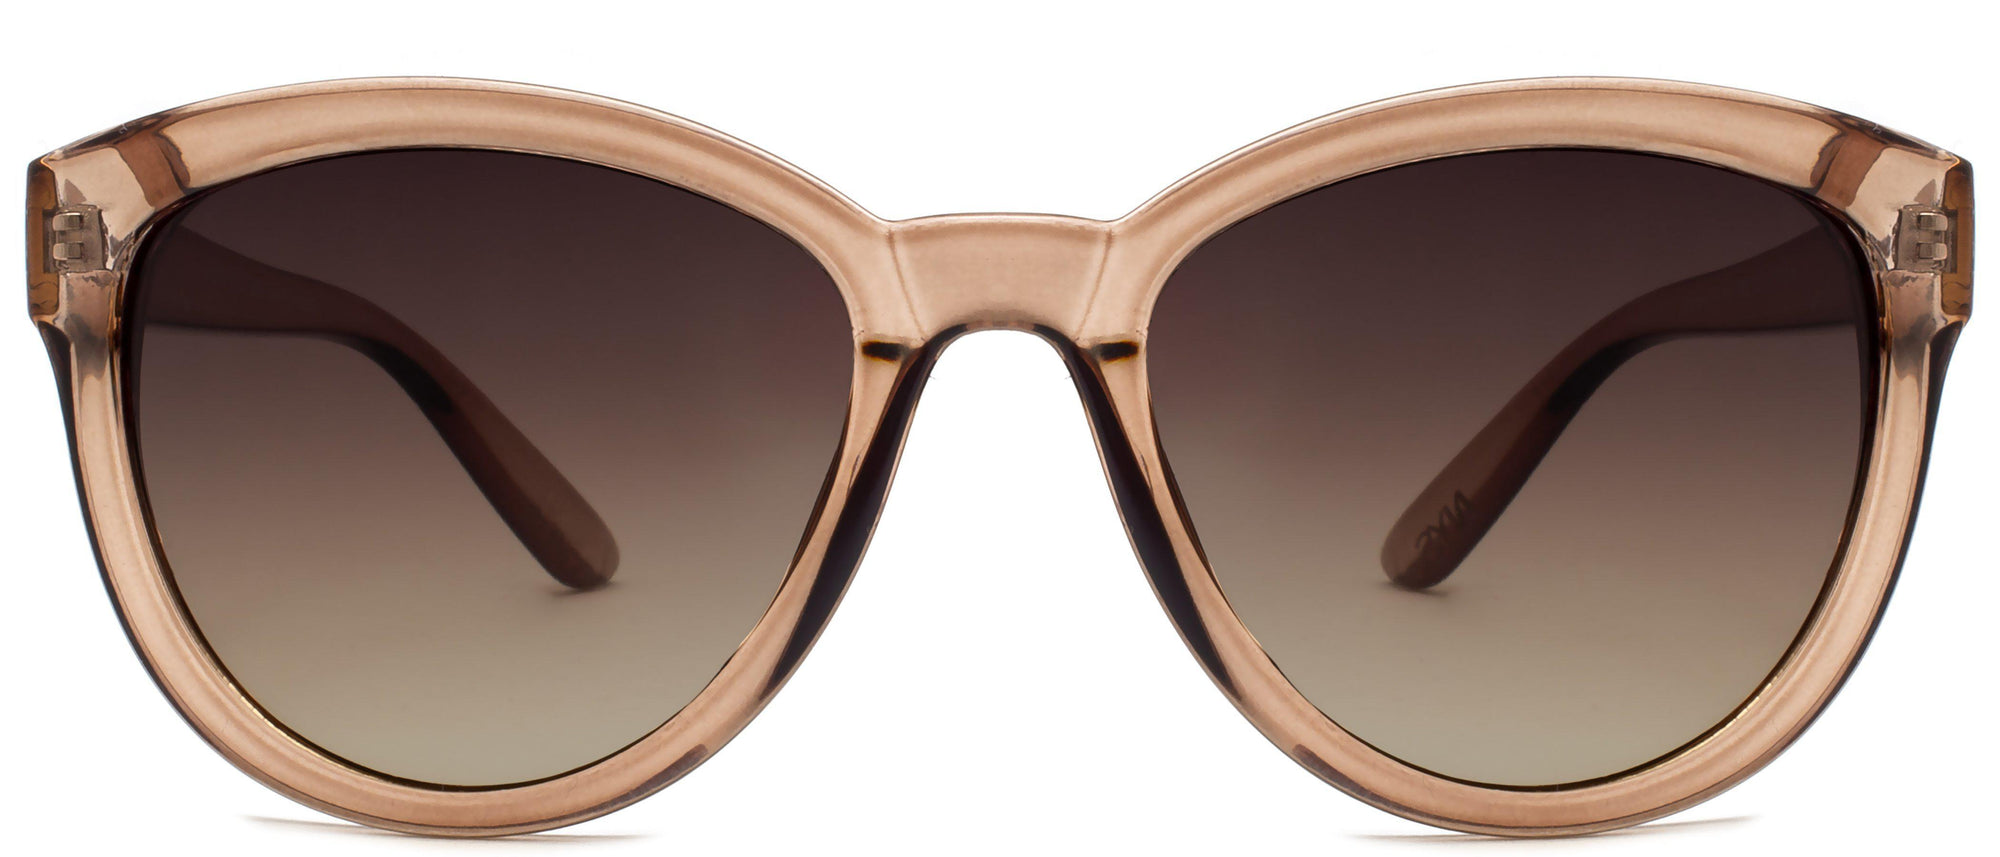 Waverly Place - Sunglasses NYS Collection Eyewear Tan/Amber